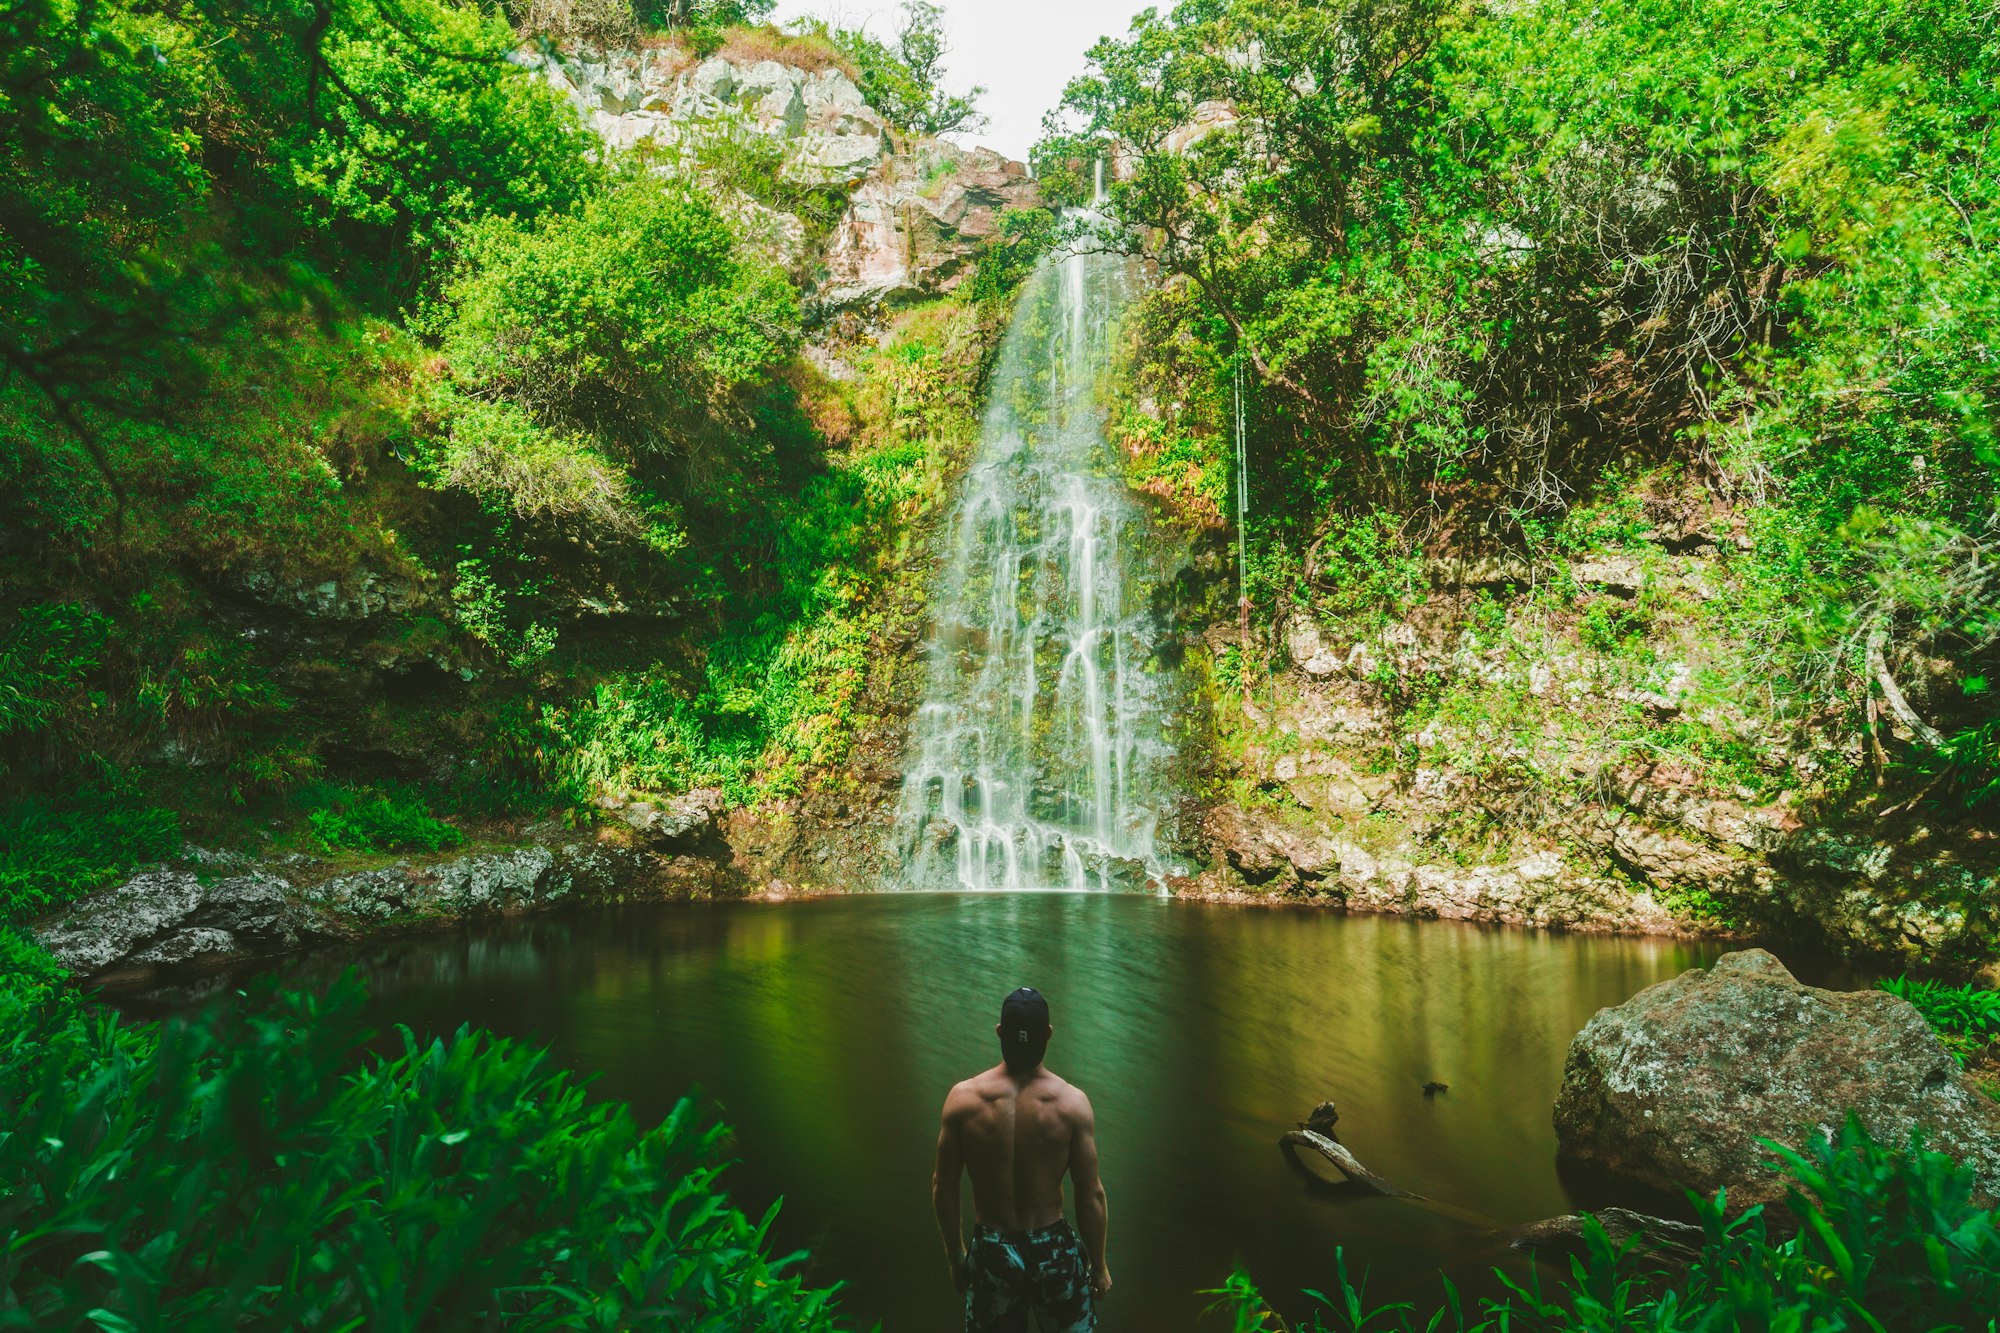 Man near a green waterfall